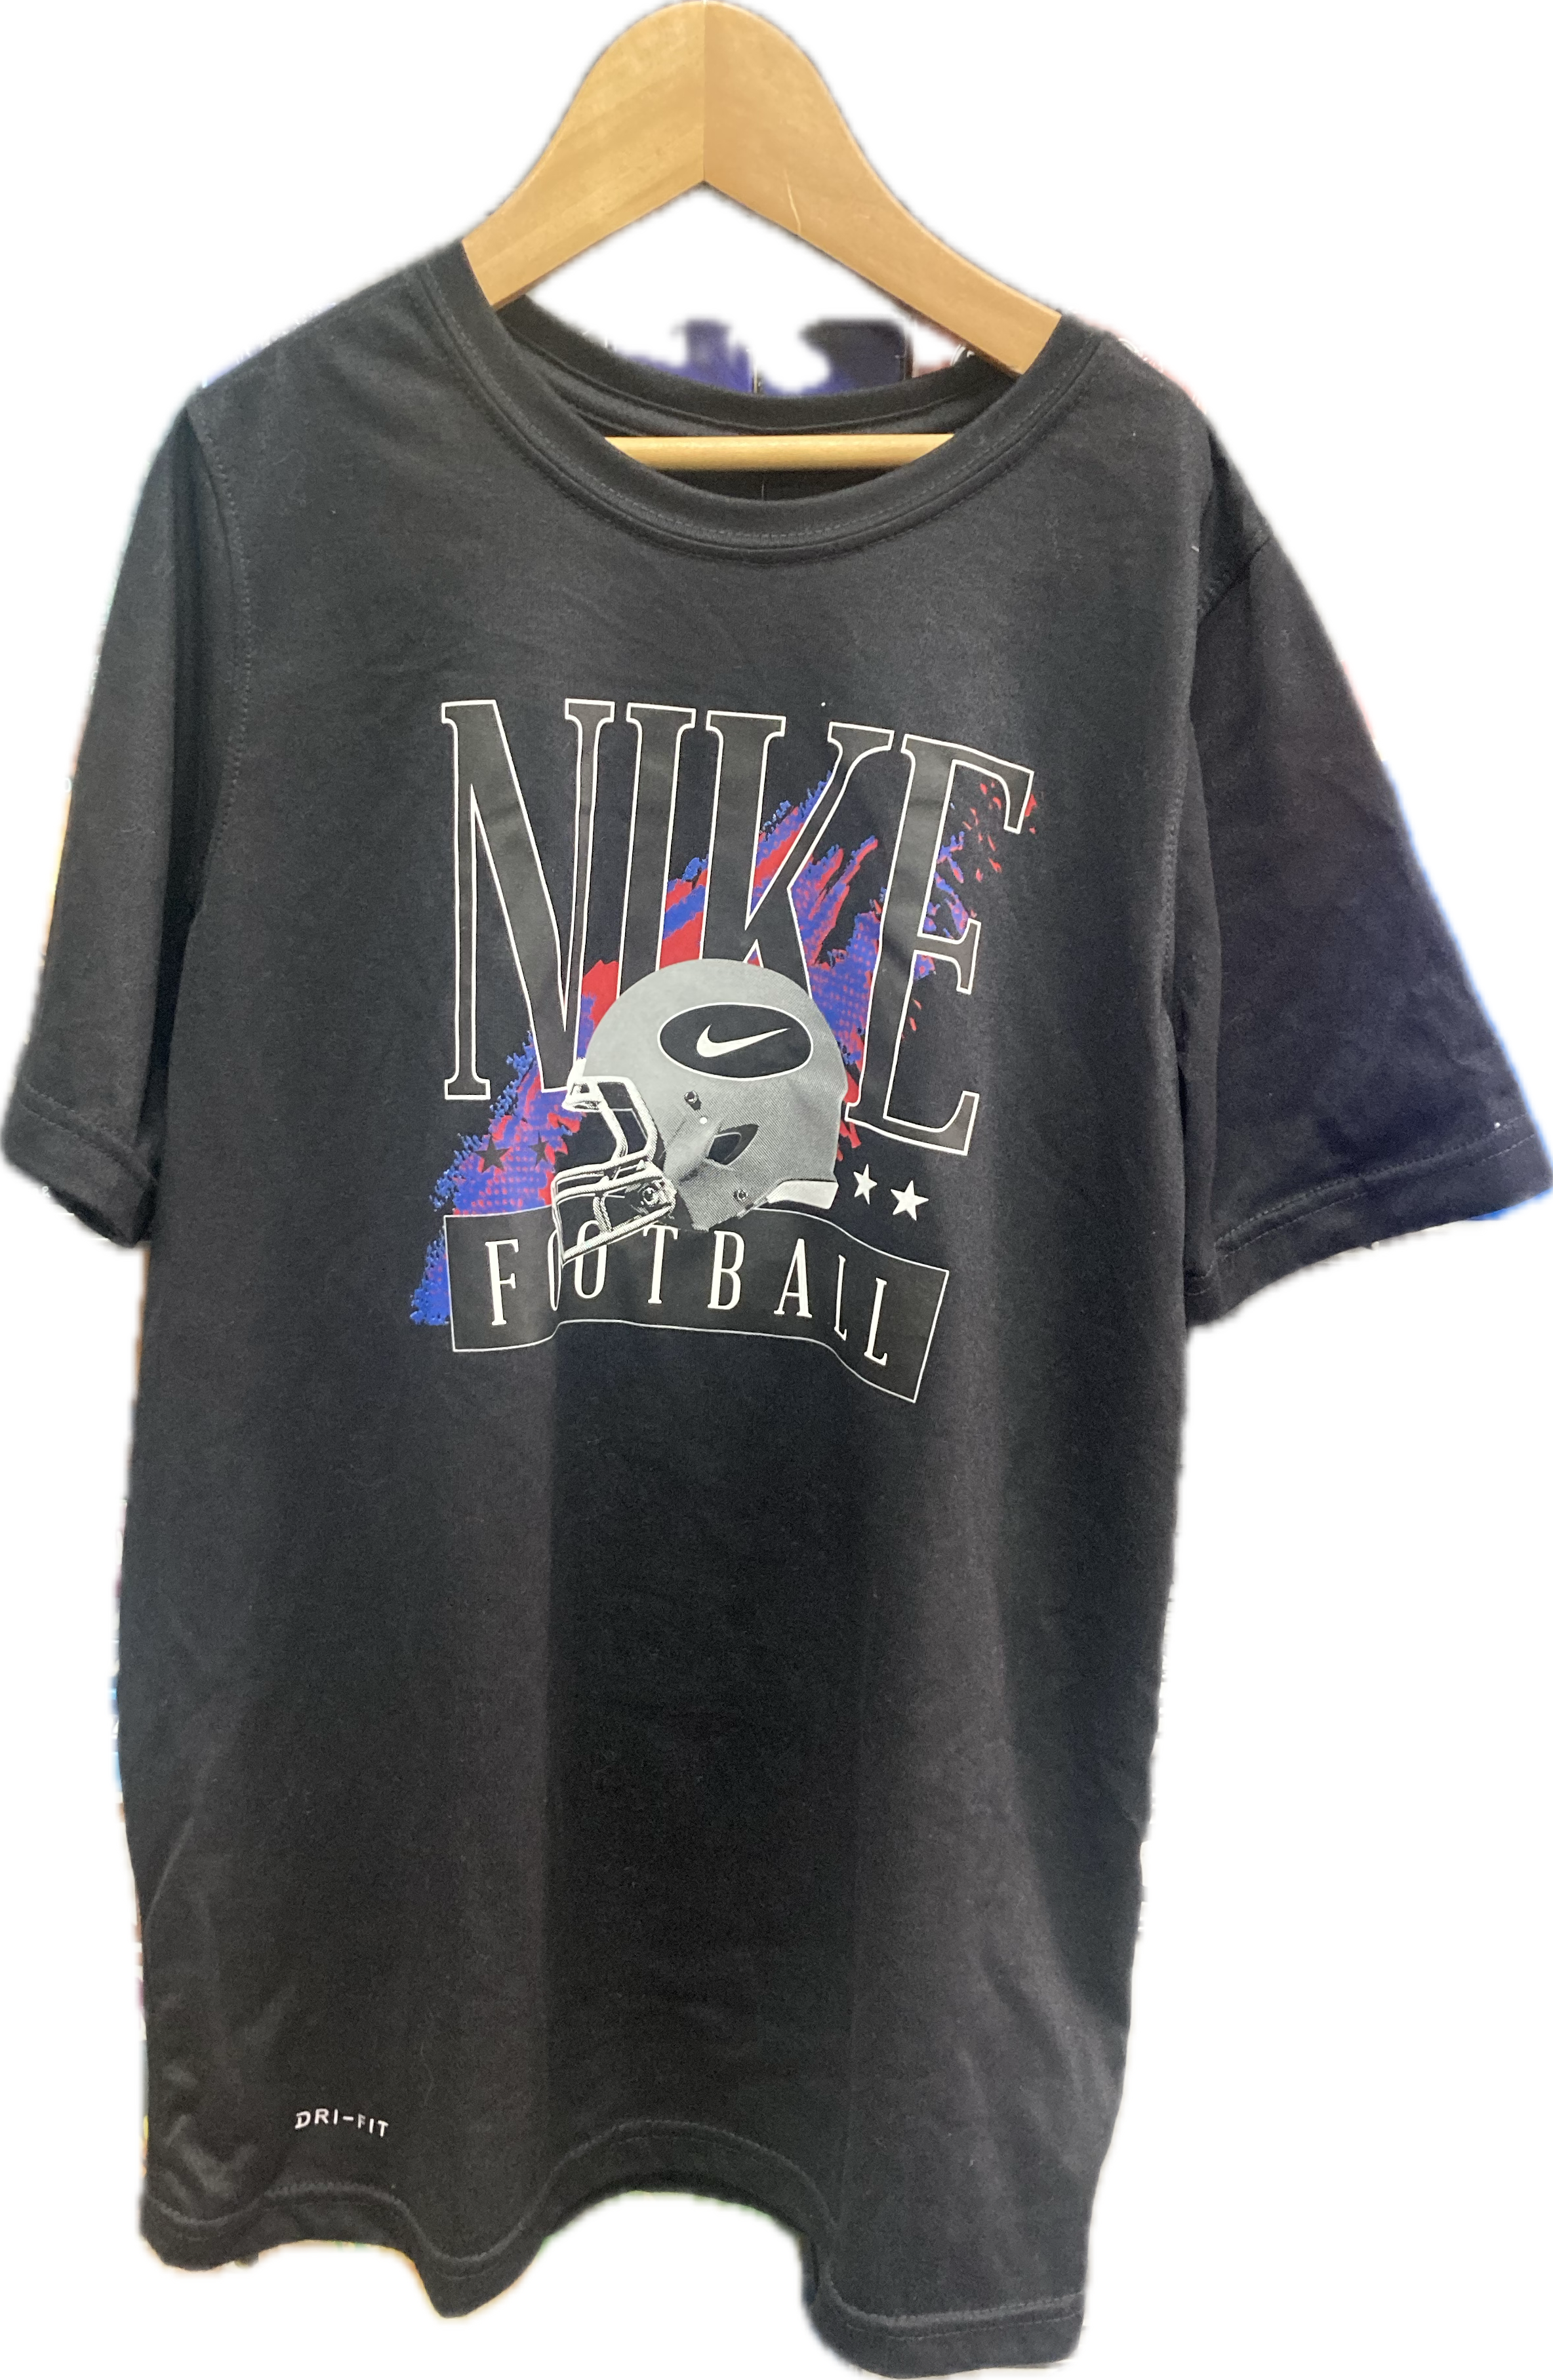 Nike Dry Football Shirt w/ Dri-Fit Technology